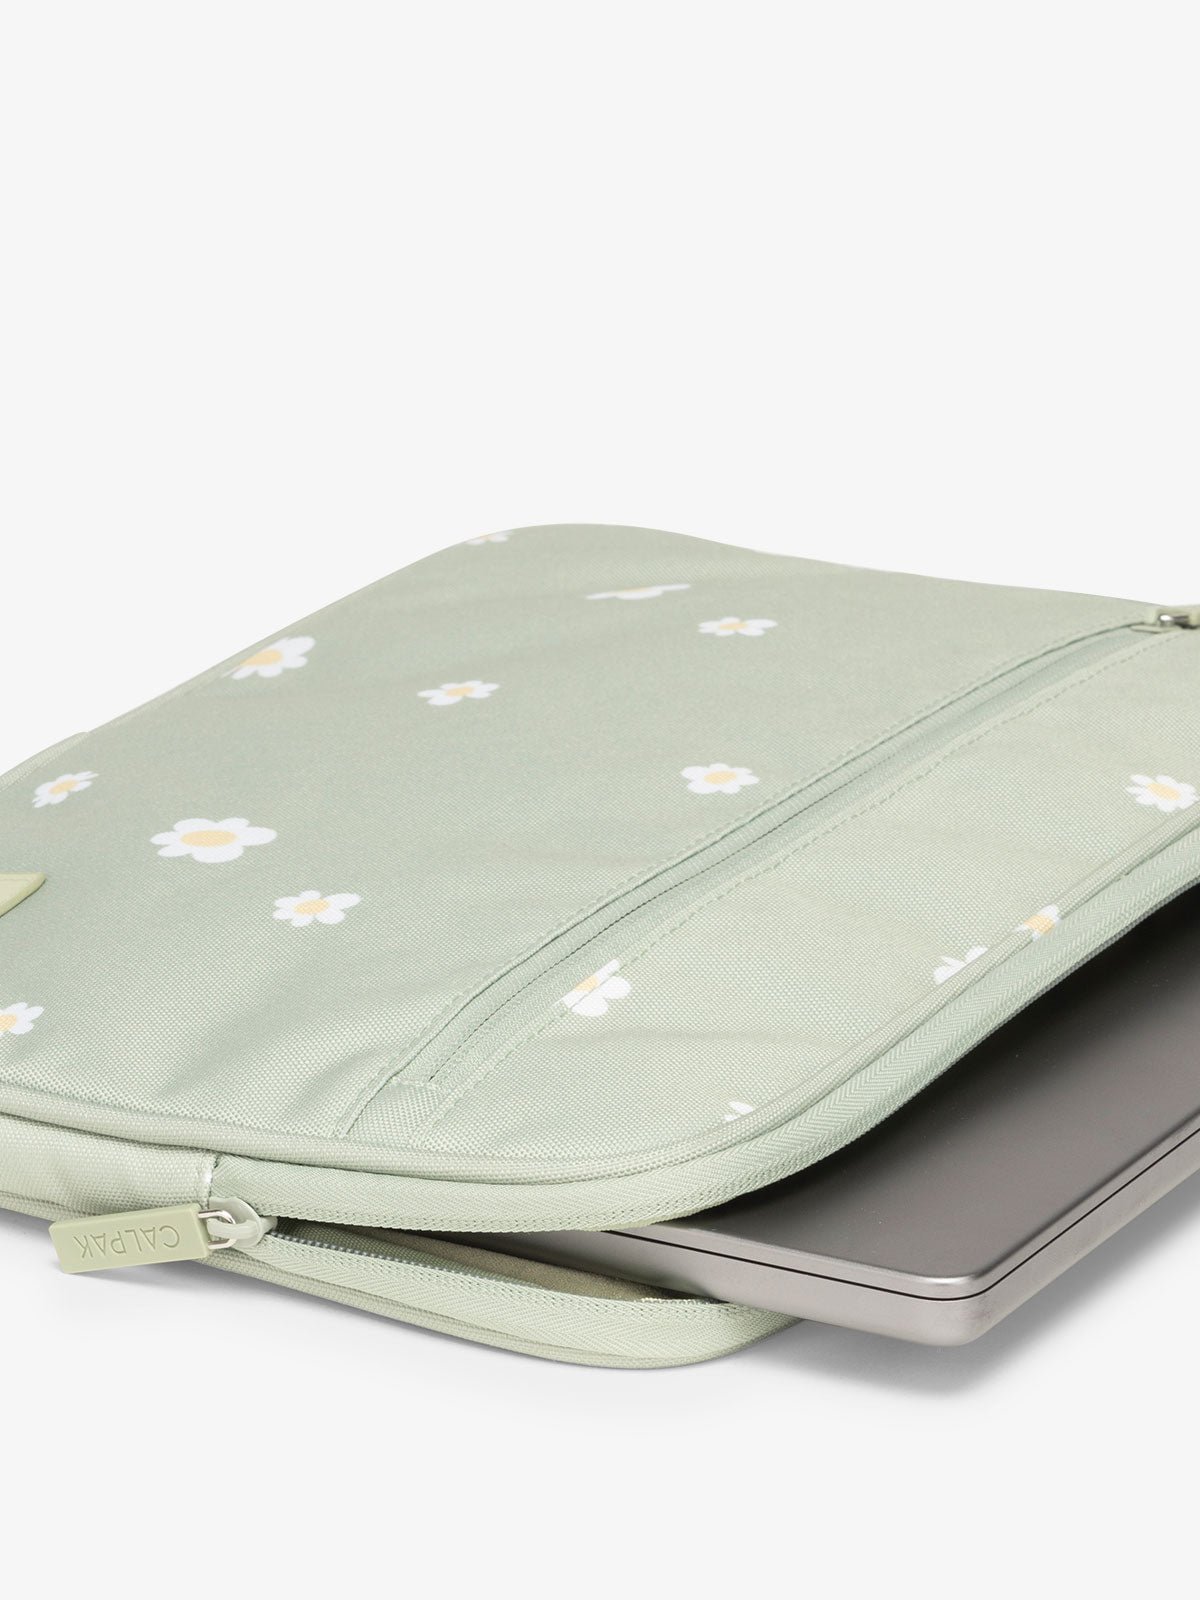 CALPAK 13-14" laptop sleeve with front zipper pouch